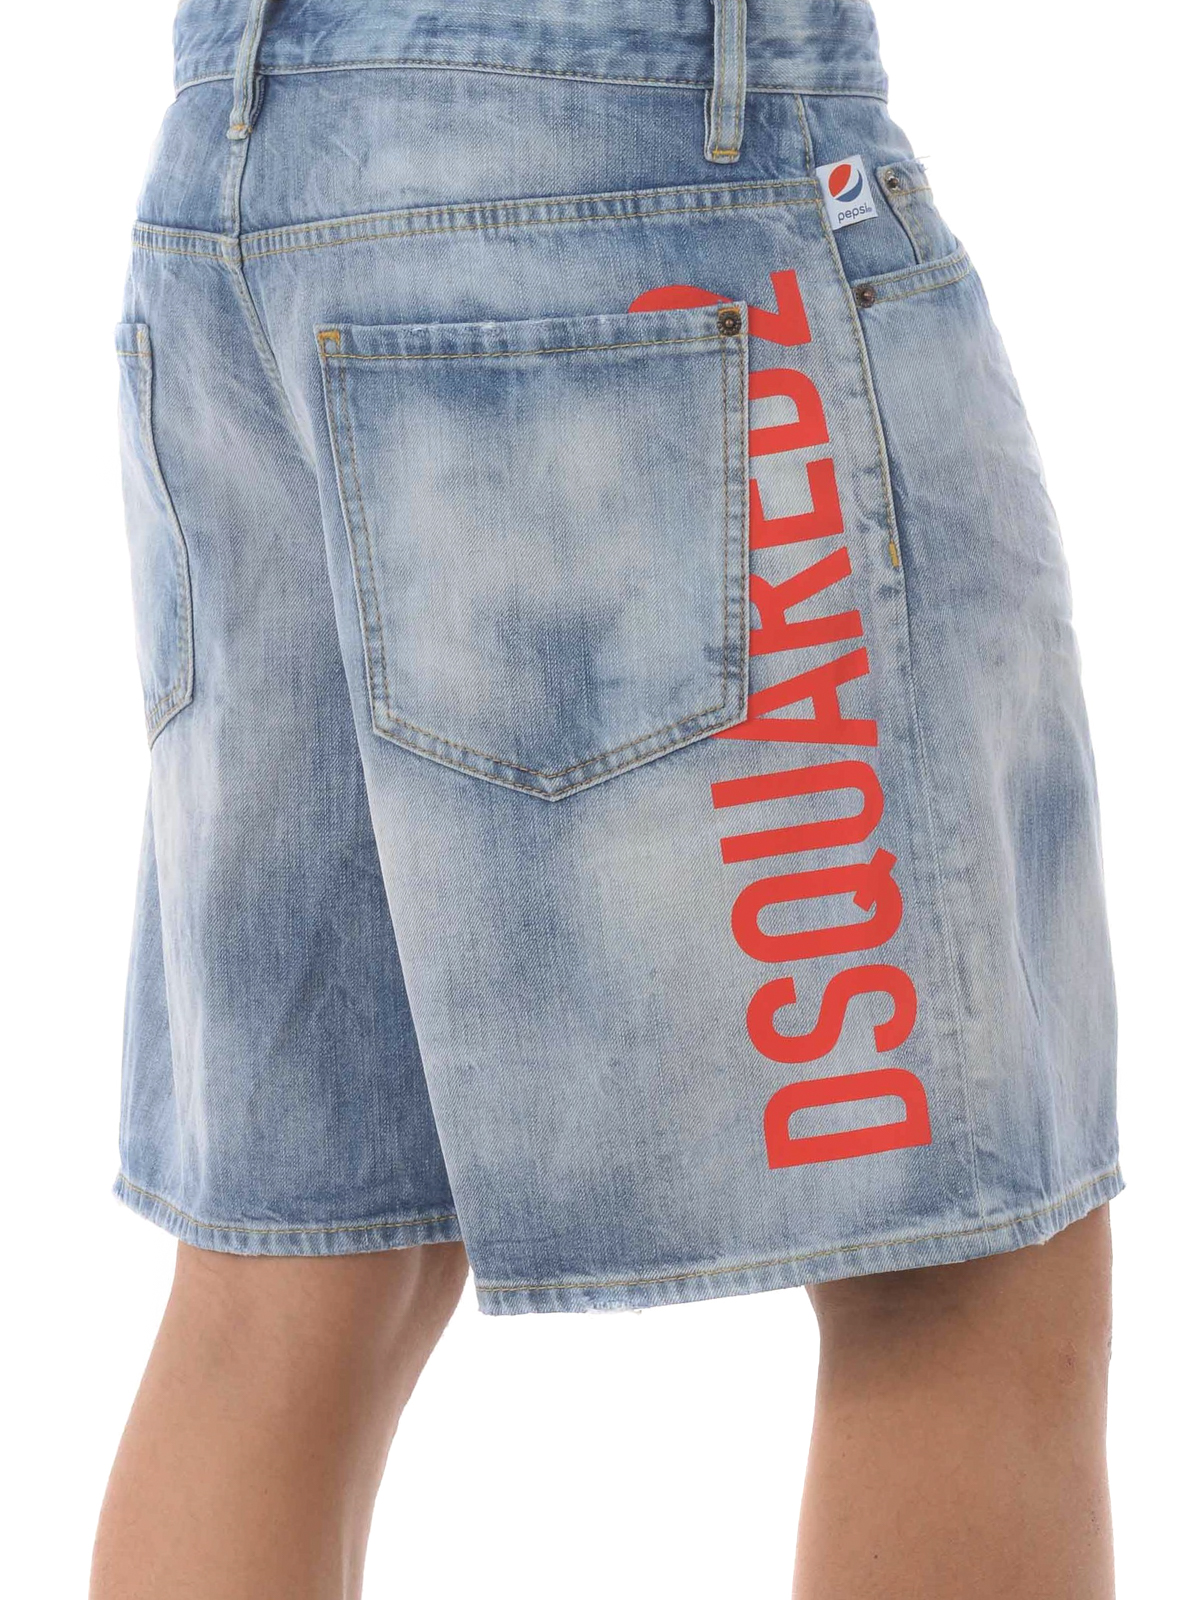 dsquared jeans shorts sales